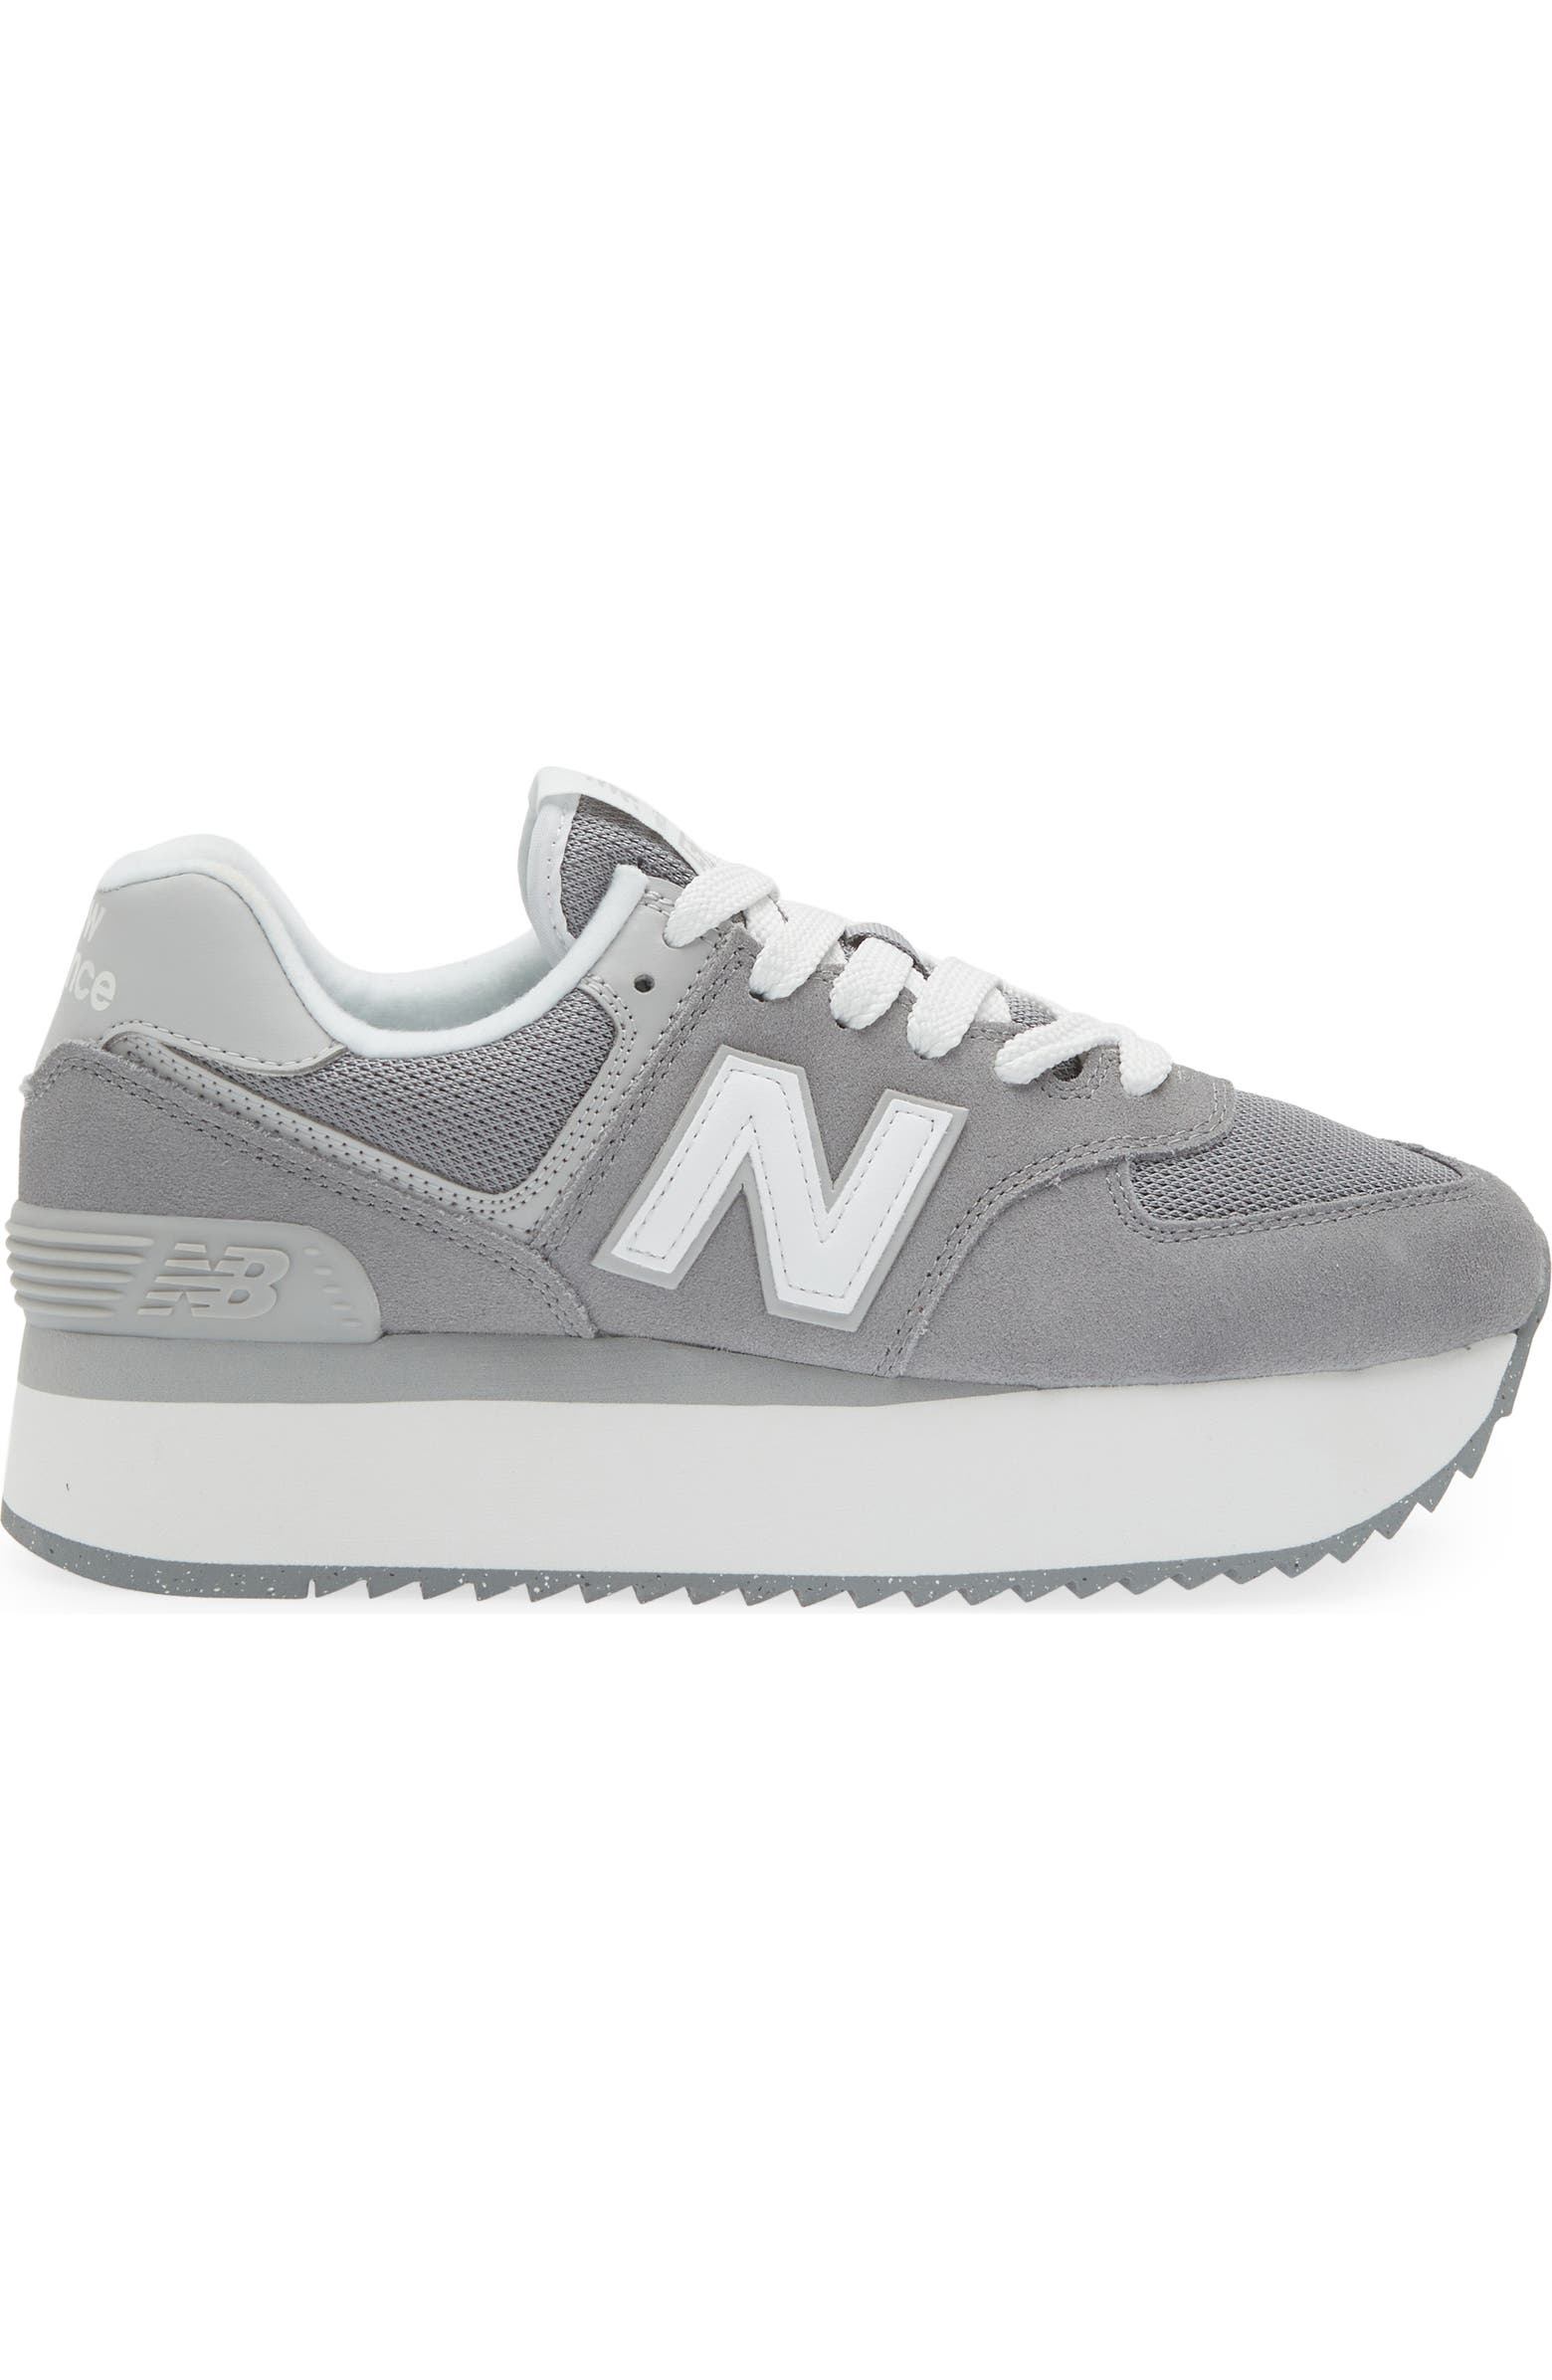 New Balance 574 Sneaker (Women) | Nordstrom